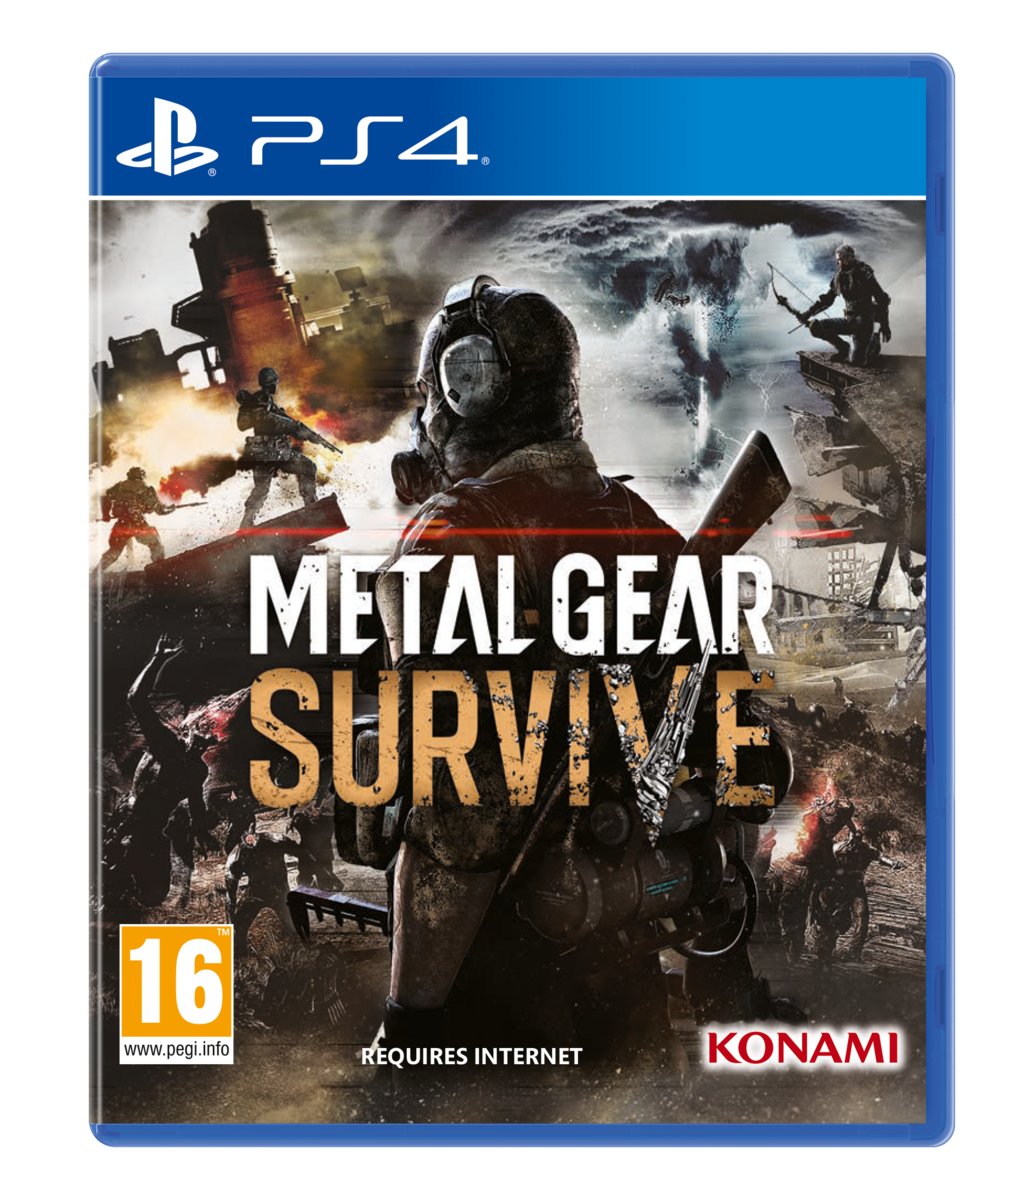 Zdjęcia - Gra Konami Metal Gear Survive, PS4 